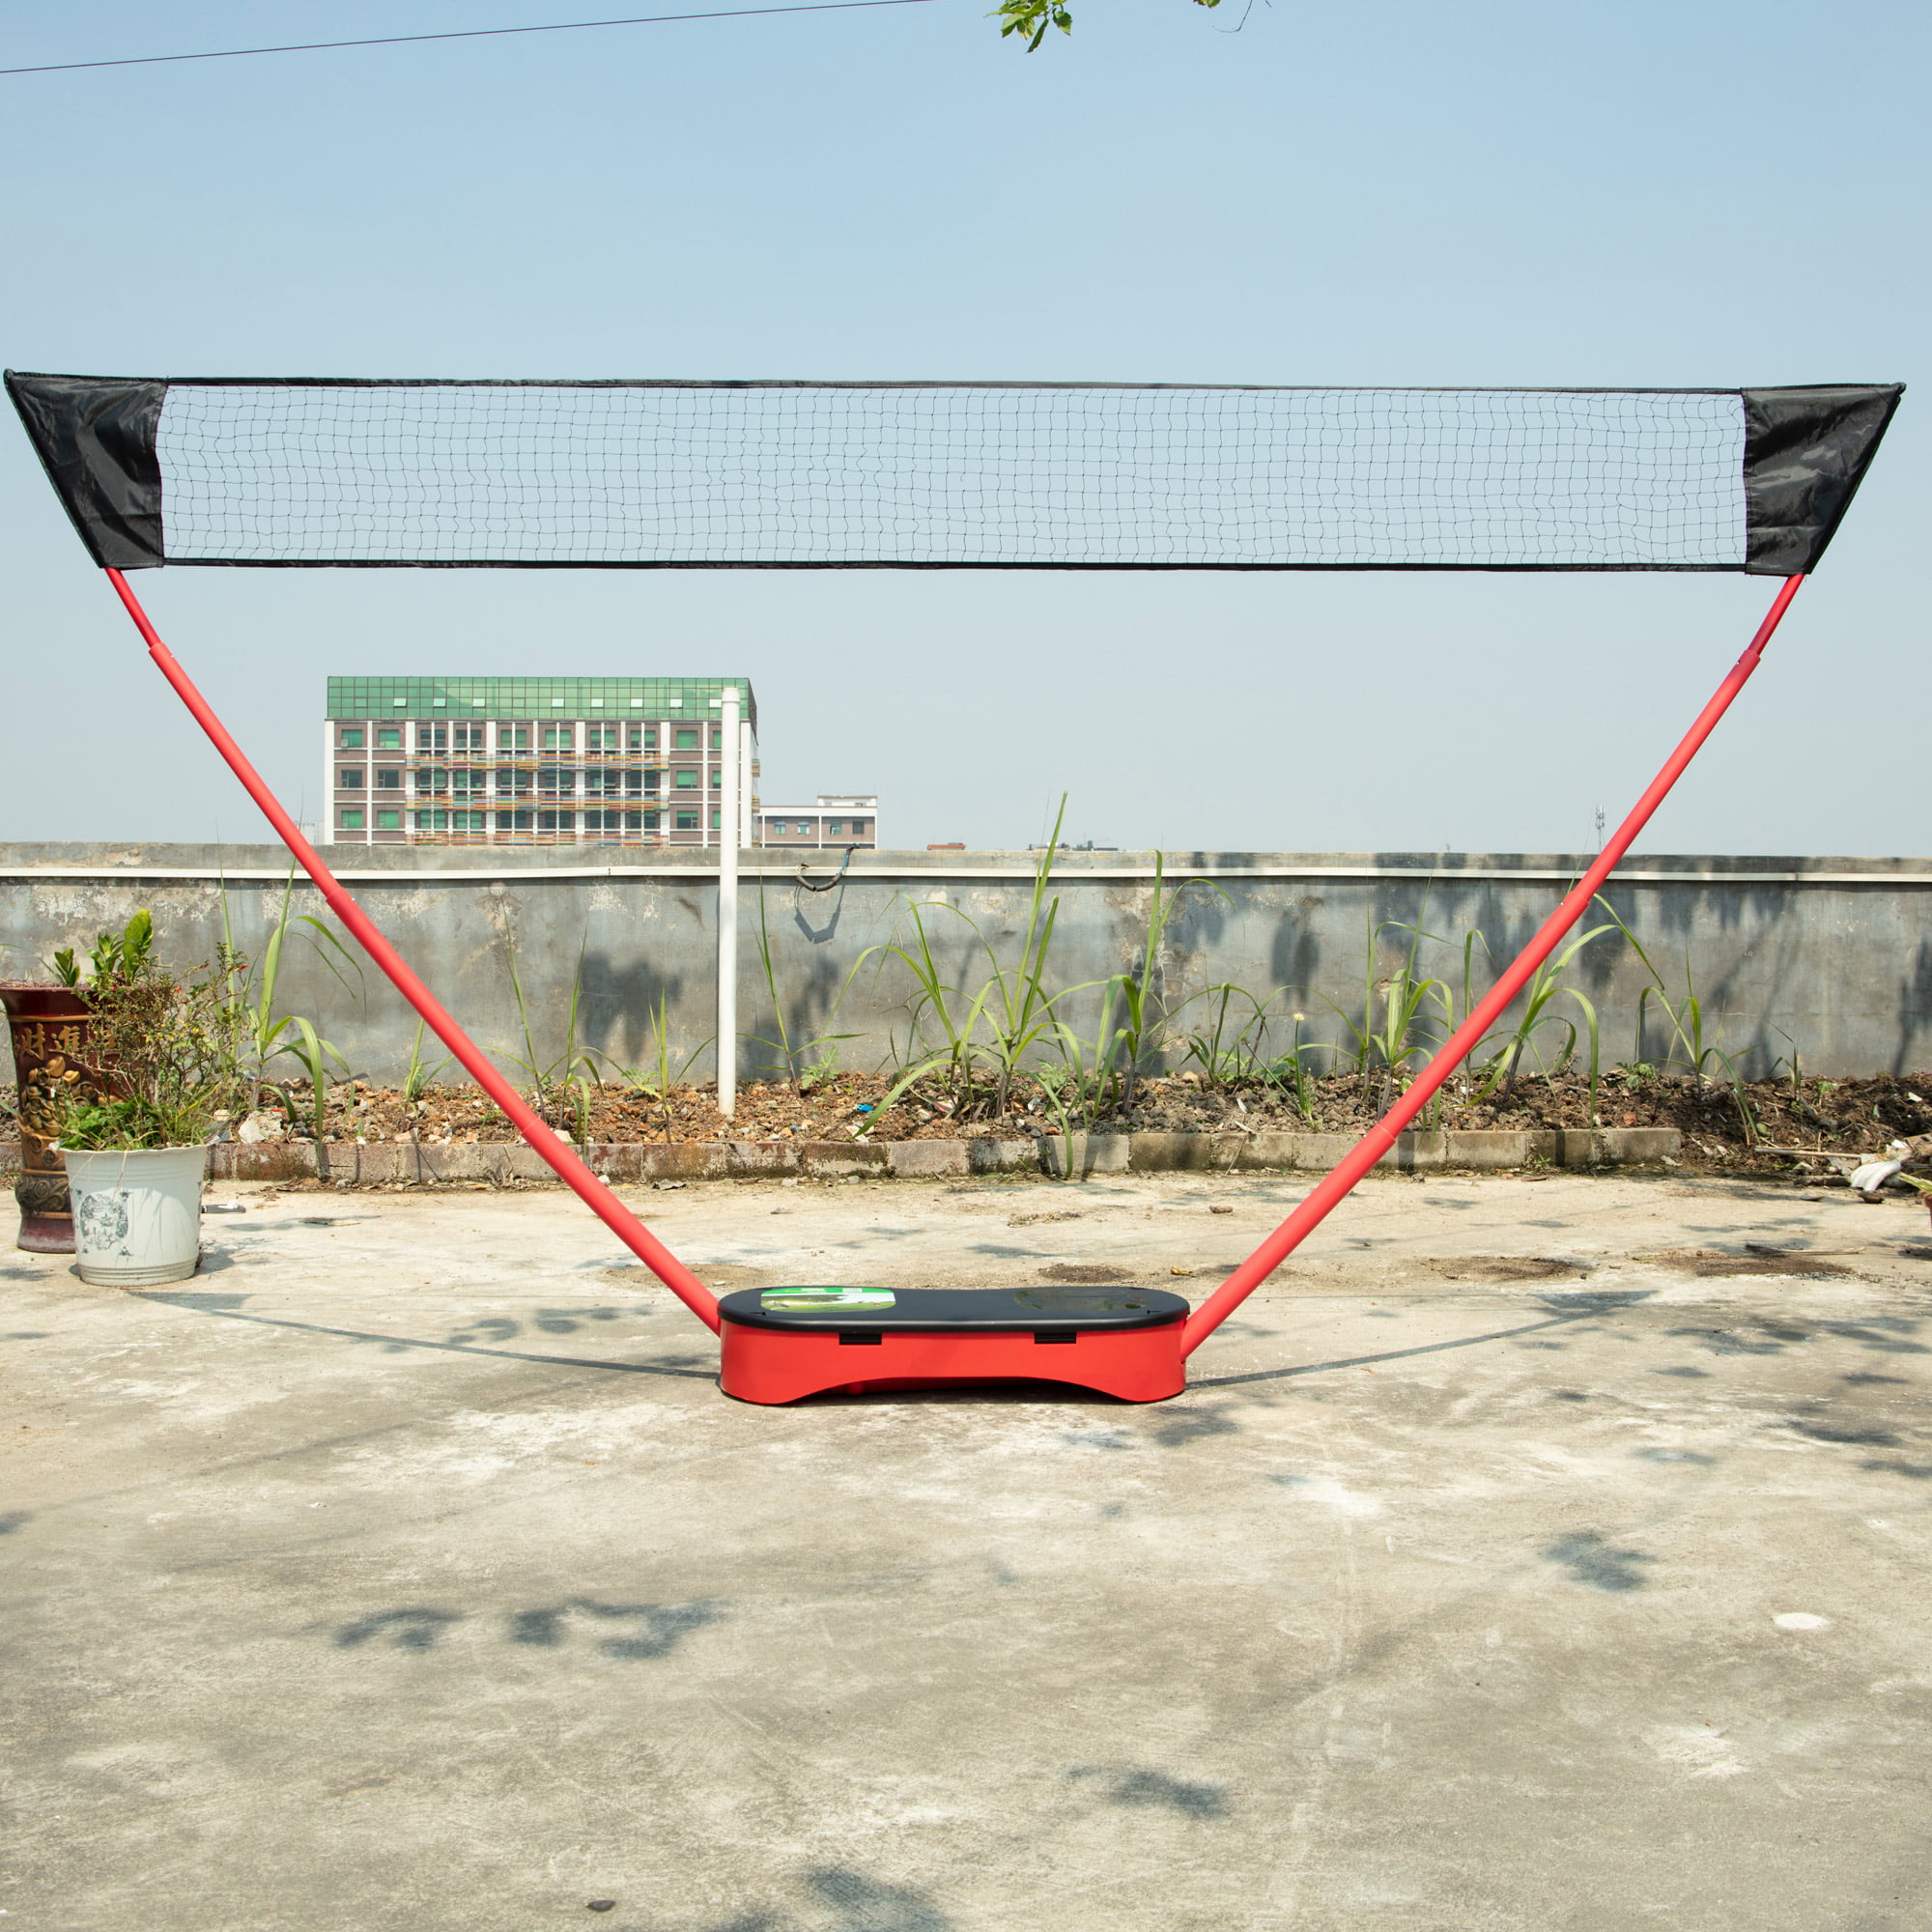 Details about   Portable 20FT Badminton Tennis Volleyball Net  For Beach Garden Indoor Outdoor